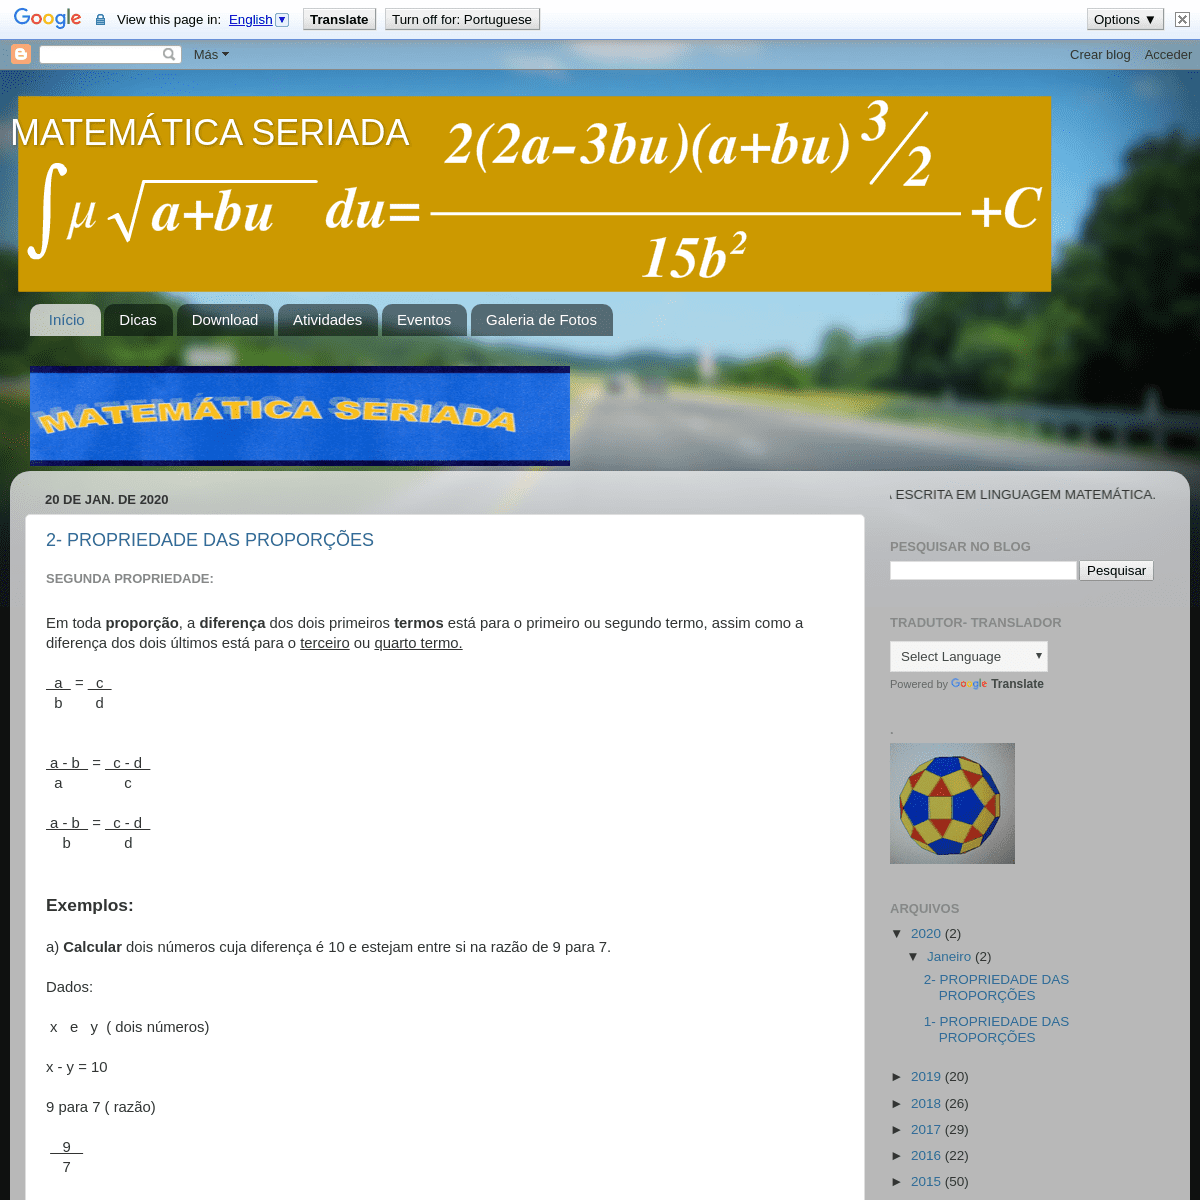 A complete backup of matematicaseriada.blogspot.com